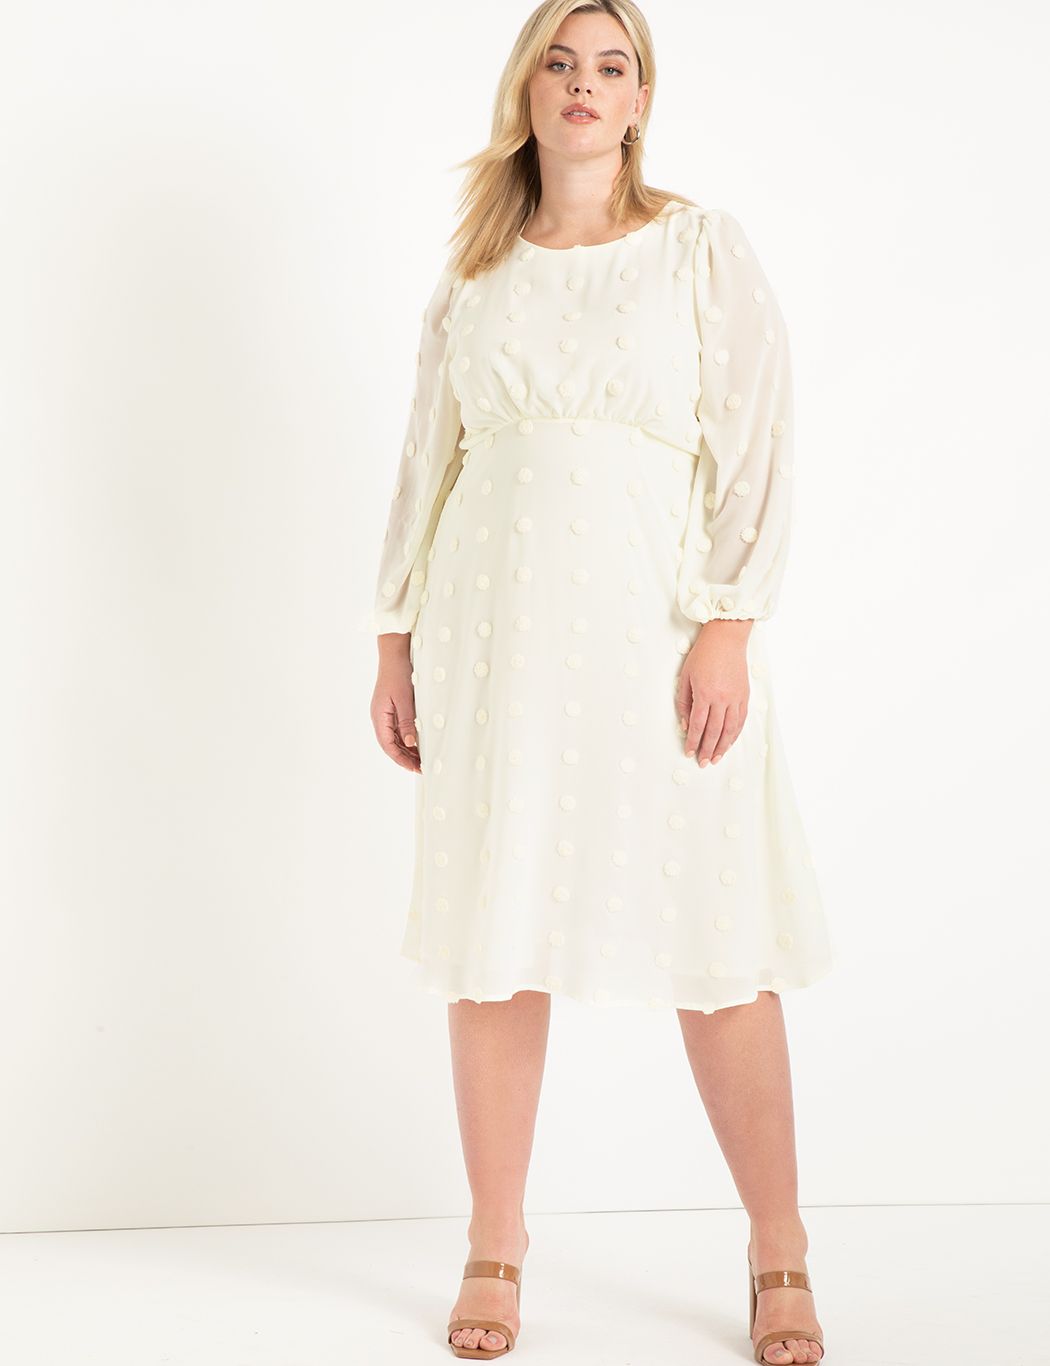 dotted tea length white dress